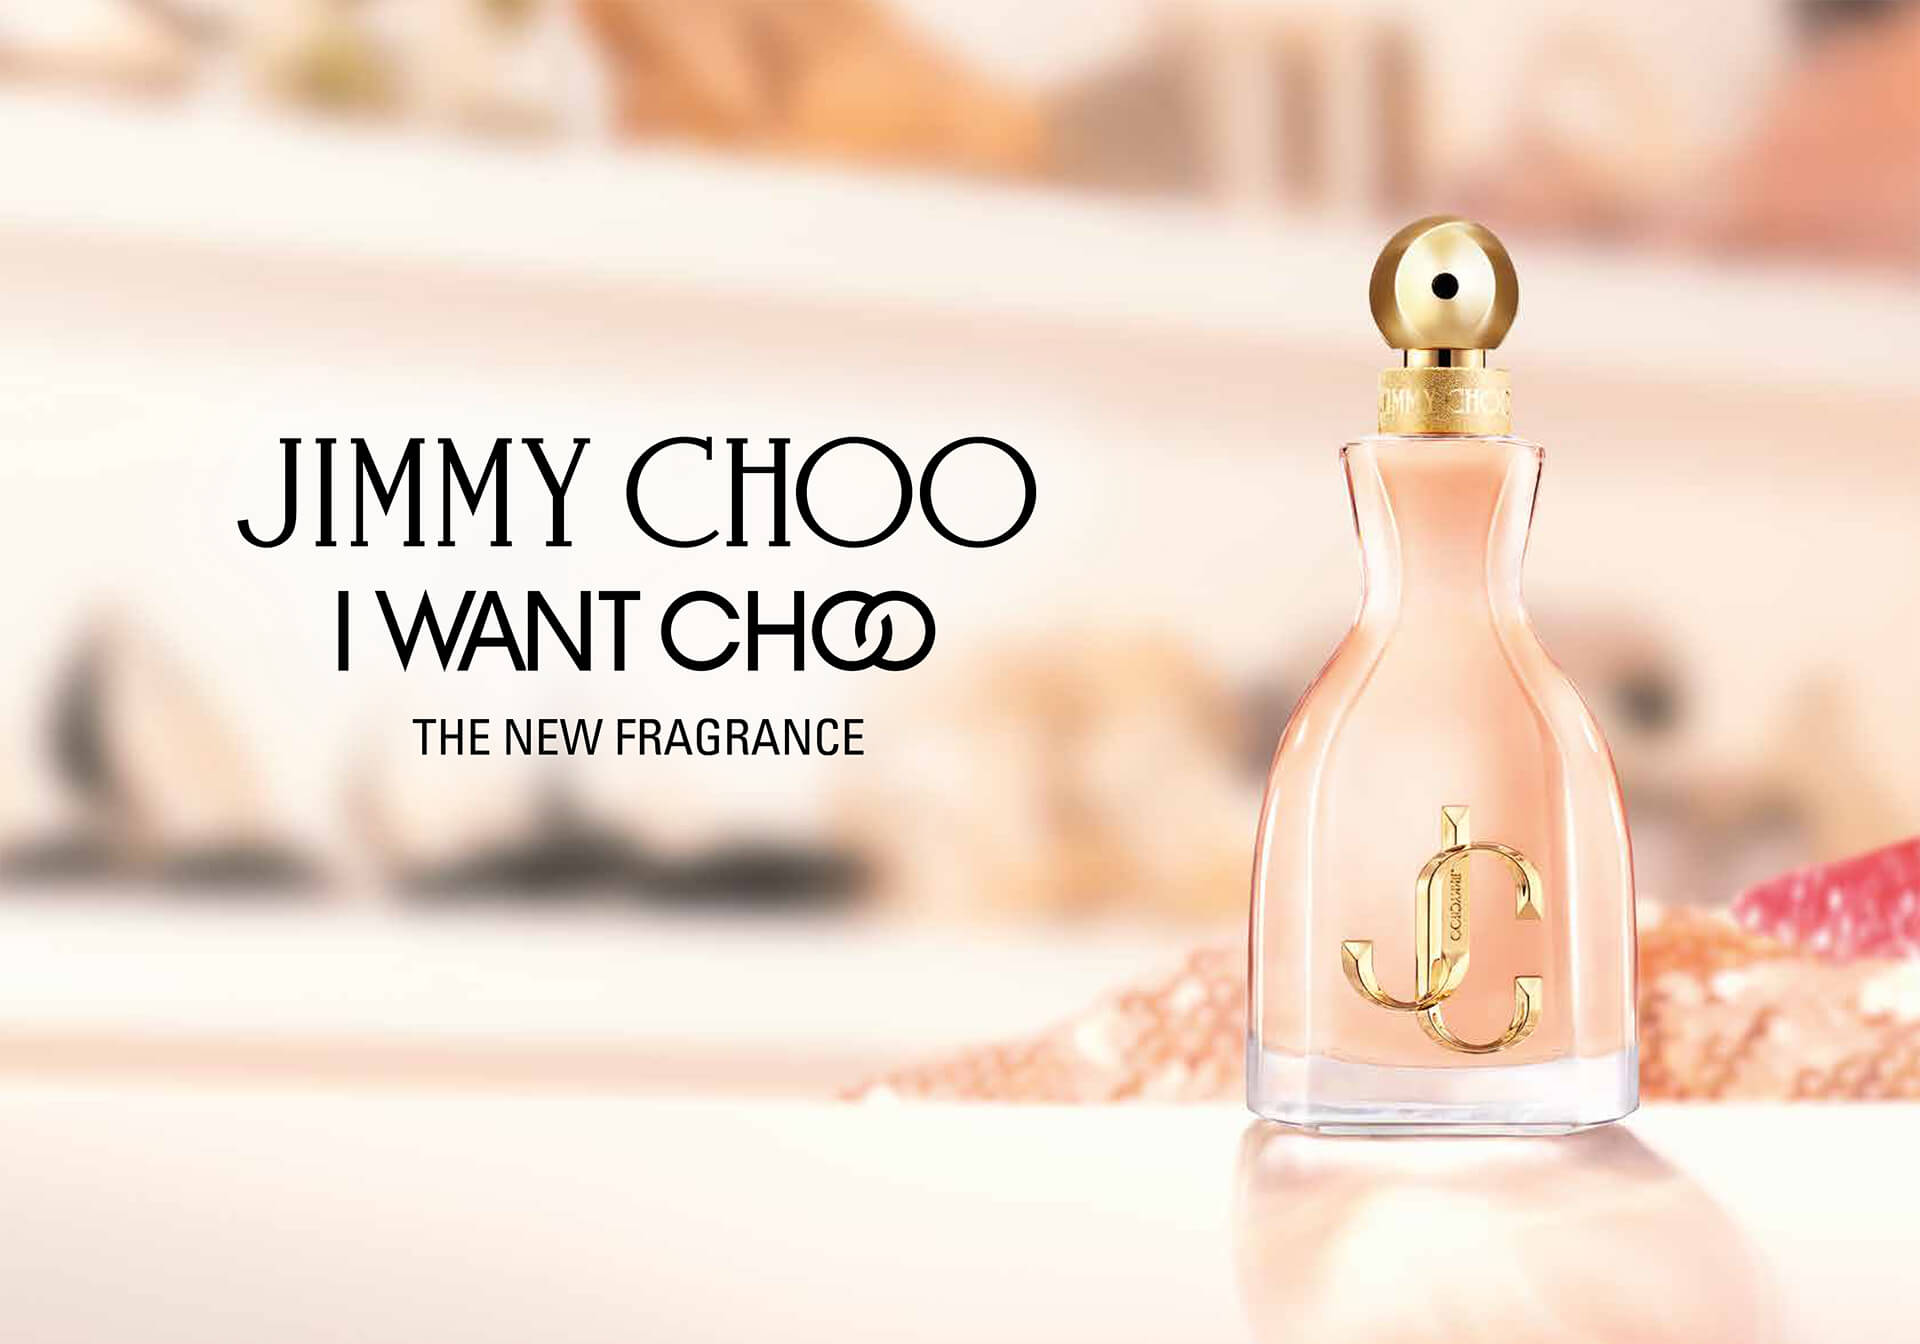 I Want Choo - Interparfums